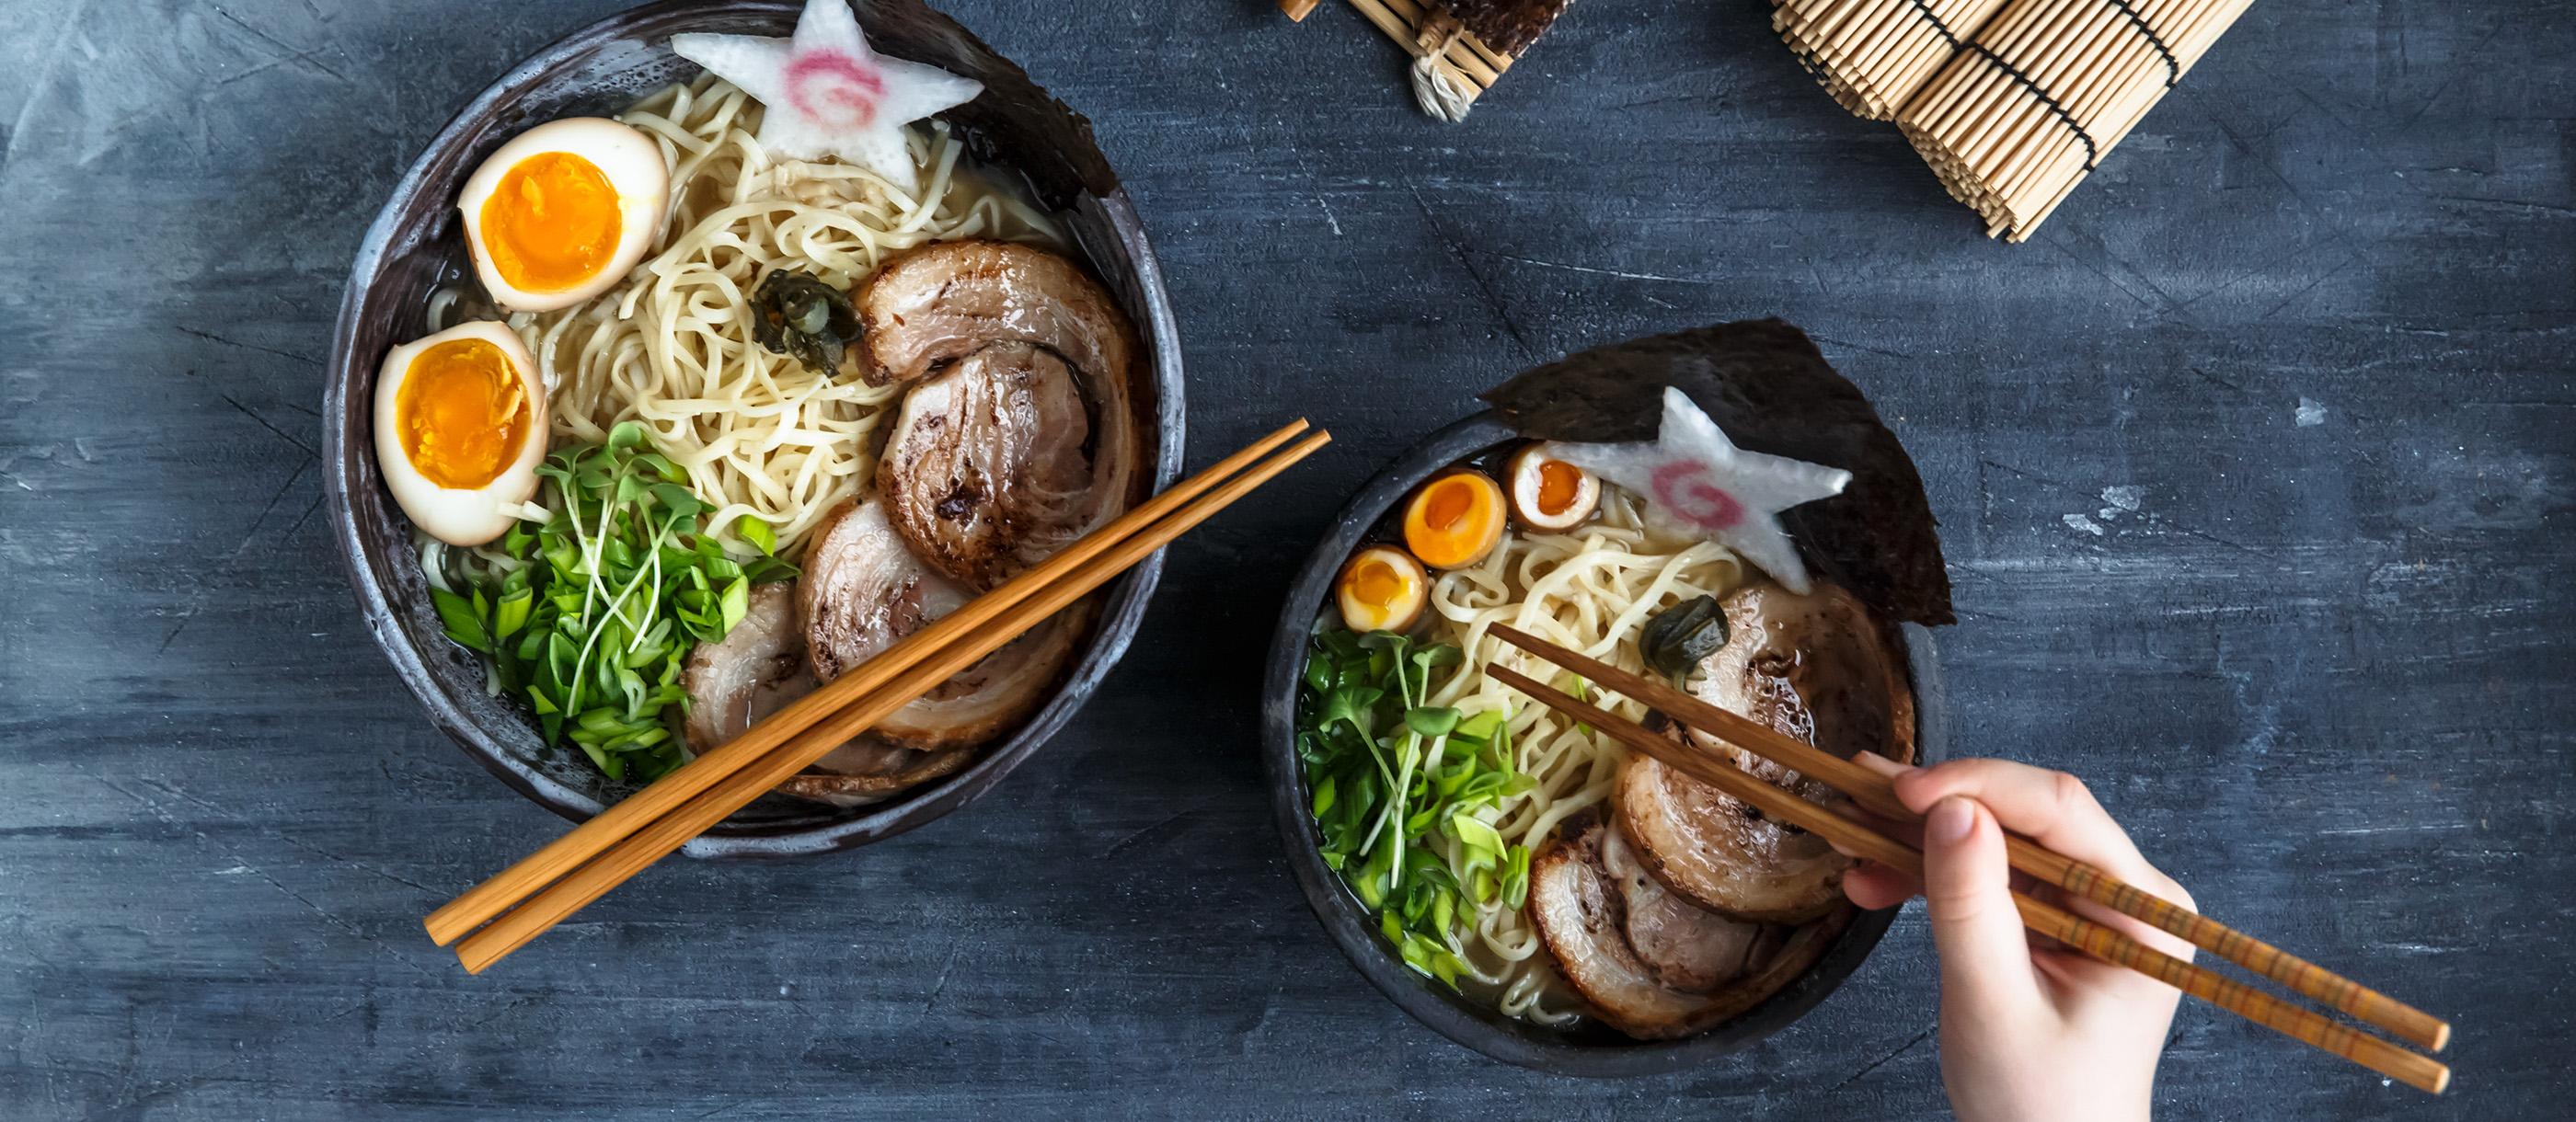 50 Most Popular Japanese Foods Tasteatlas - Photos